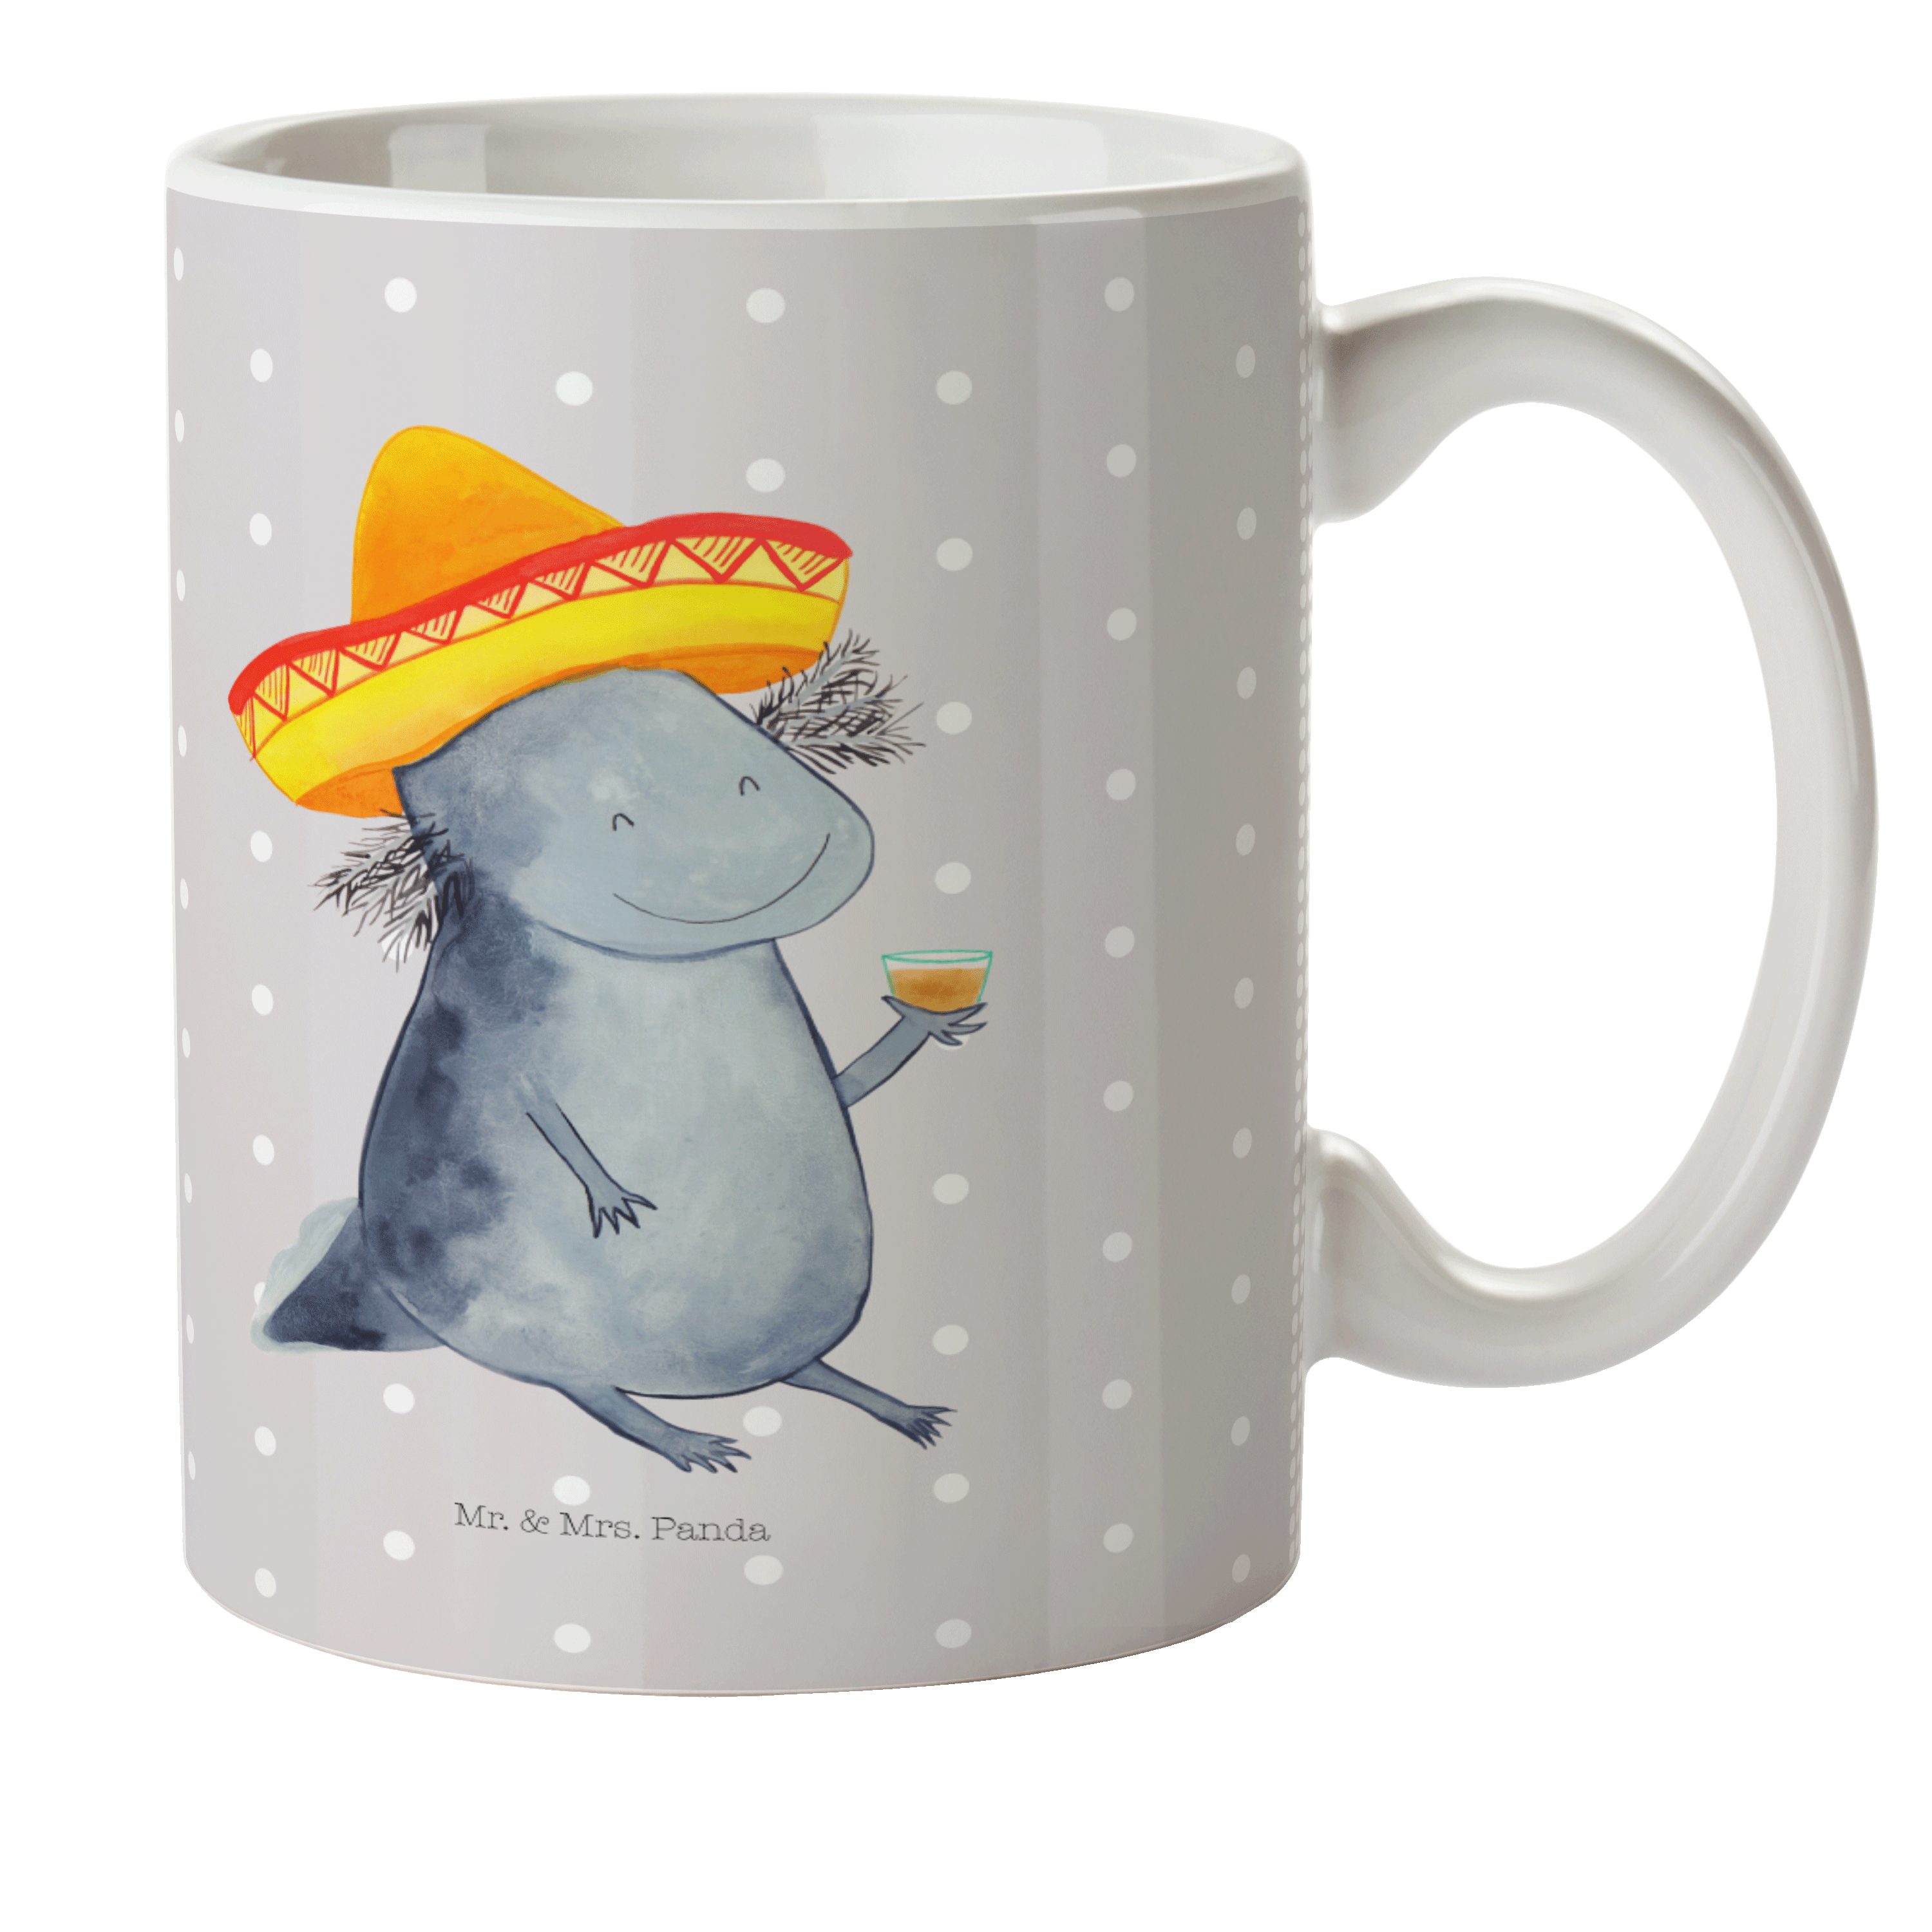 Mr. & Mrs. Panda Kinderbecher Axolotl Tequila - Grau Pastell - Geschenk, Outdoorgeschirr, Kinderbec, Kunststoff